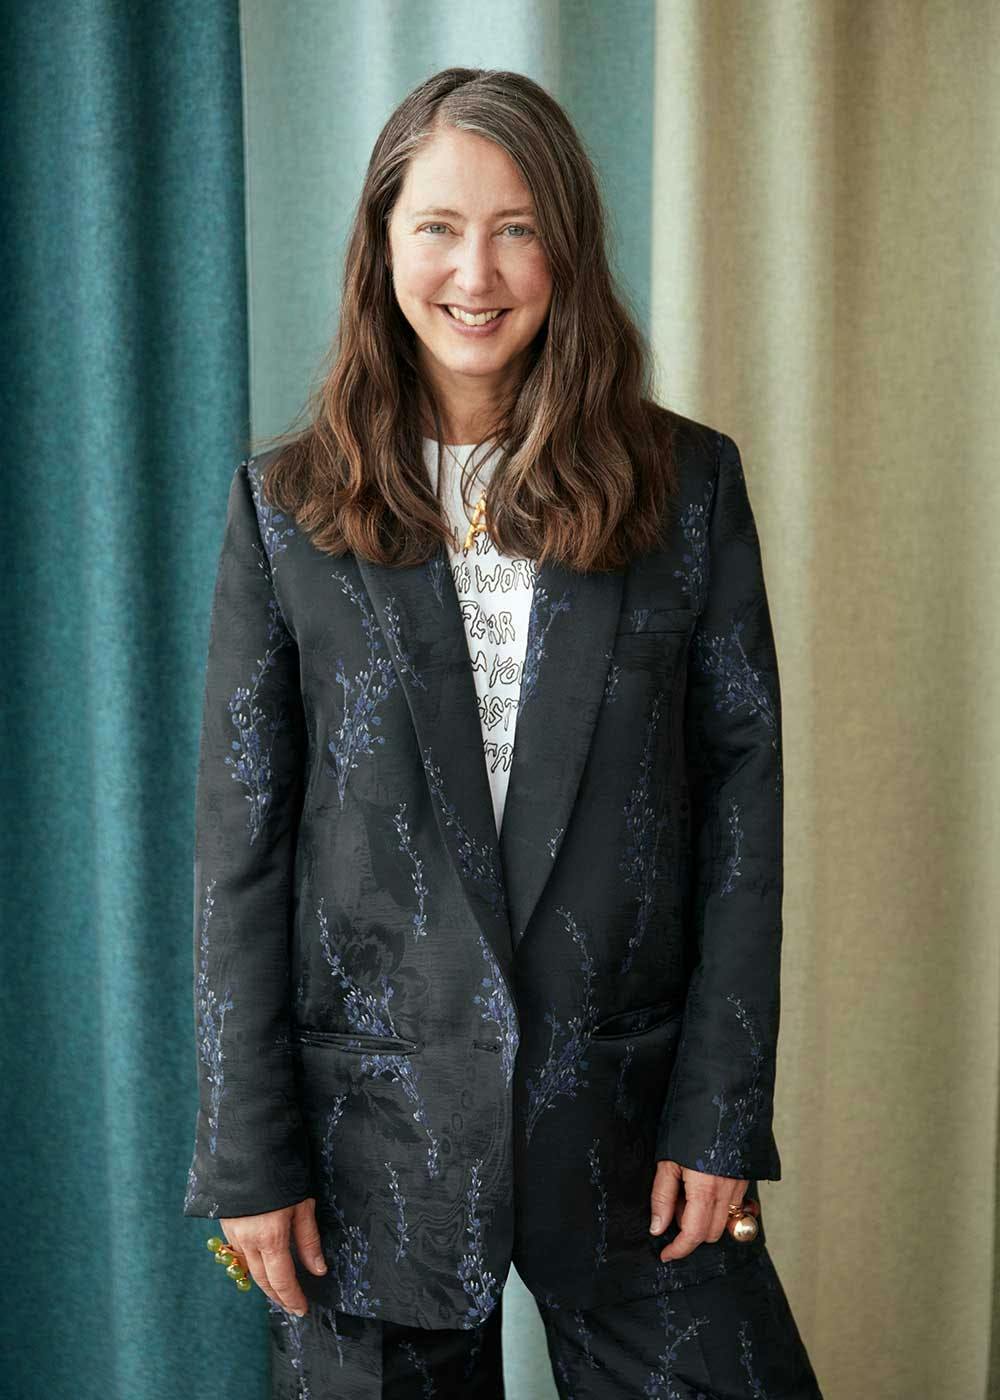 clothing apparel coat overcoat jacket suit blazer female person sleeve